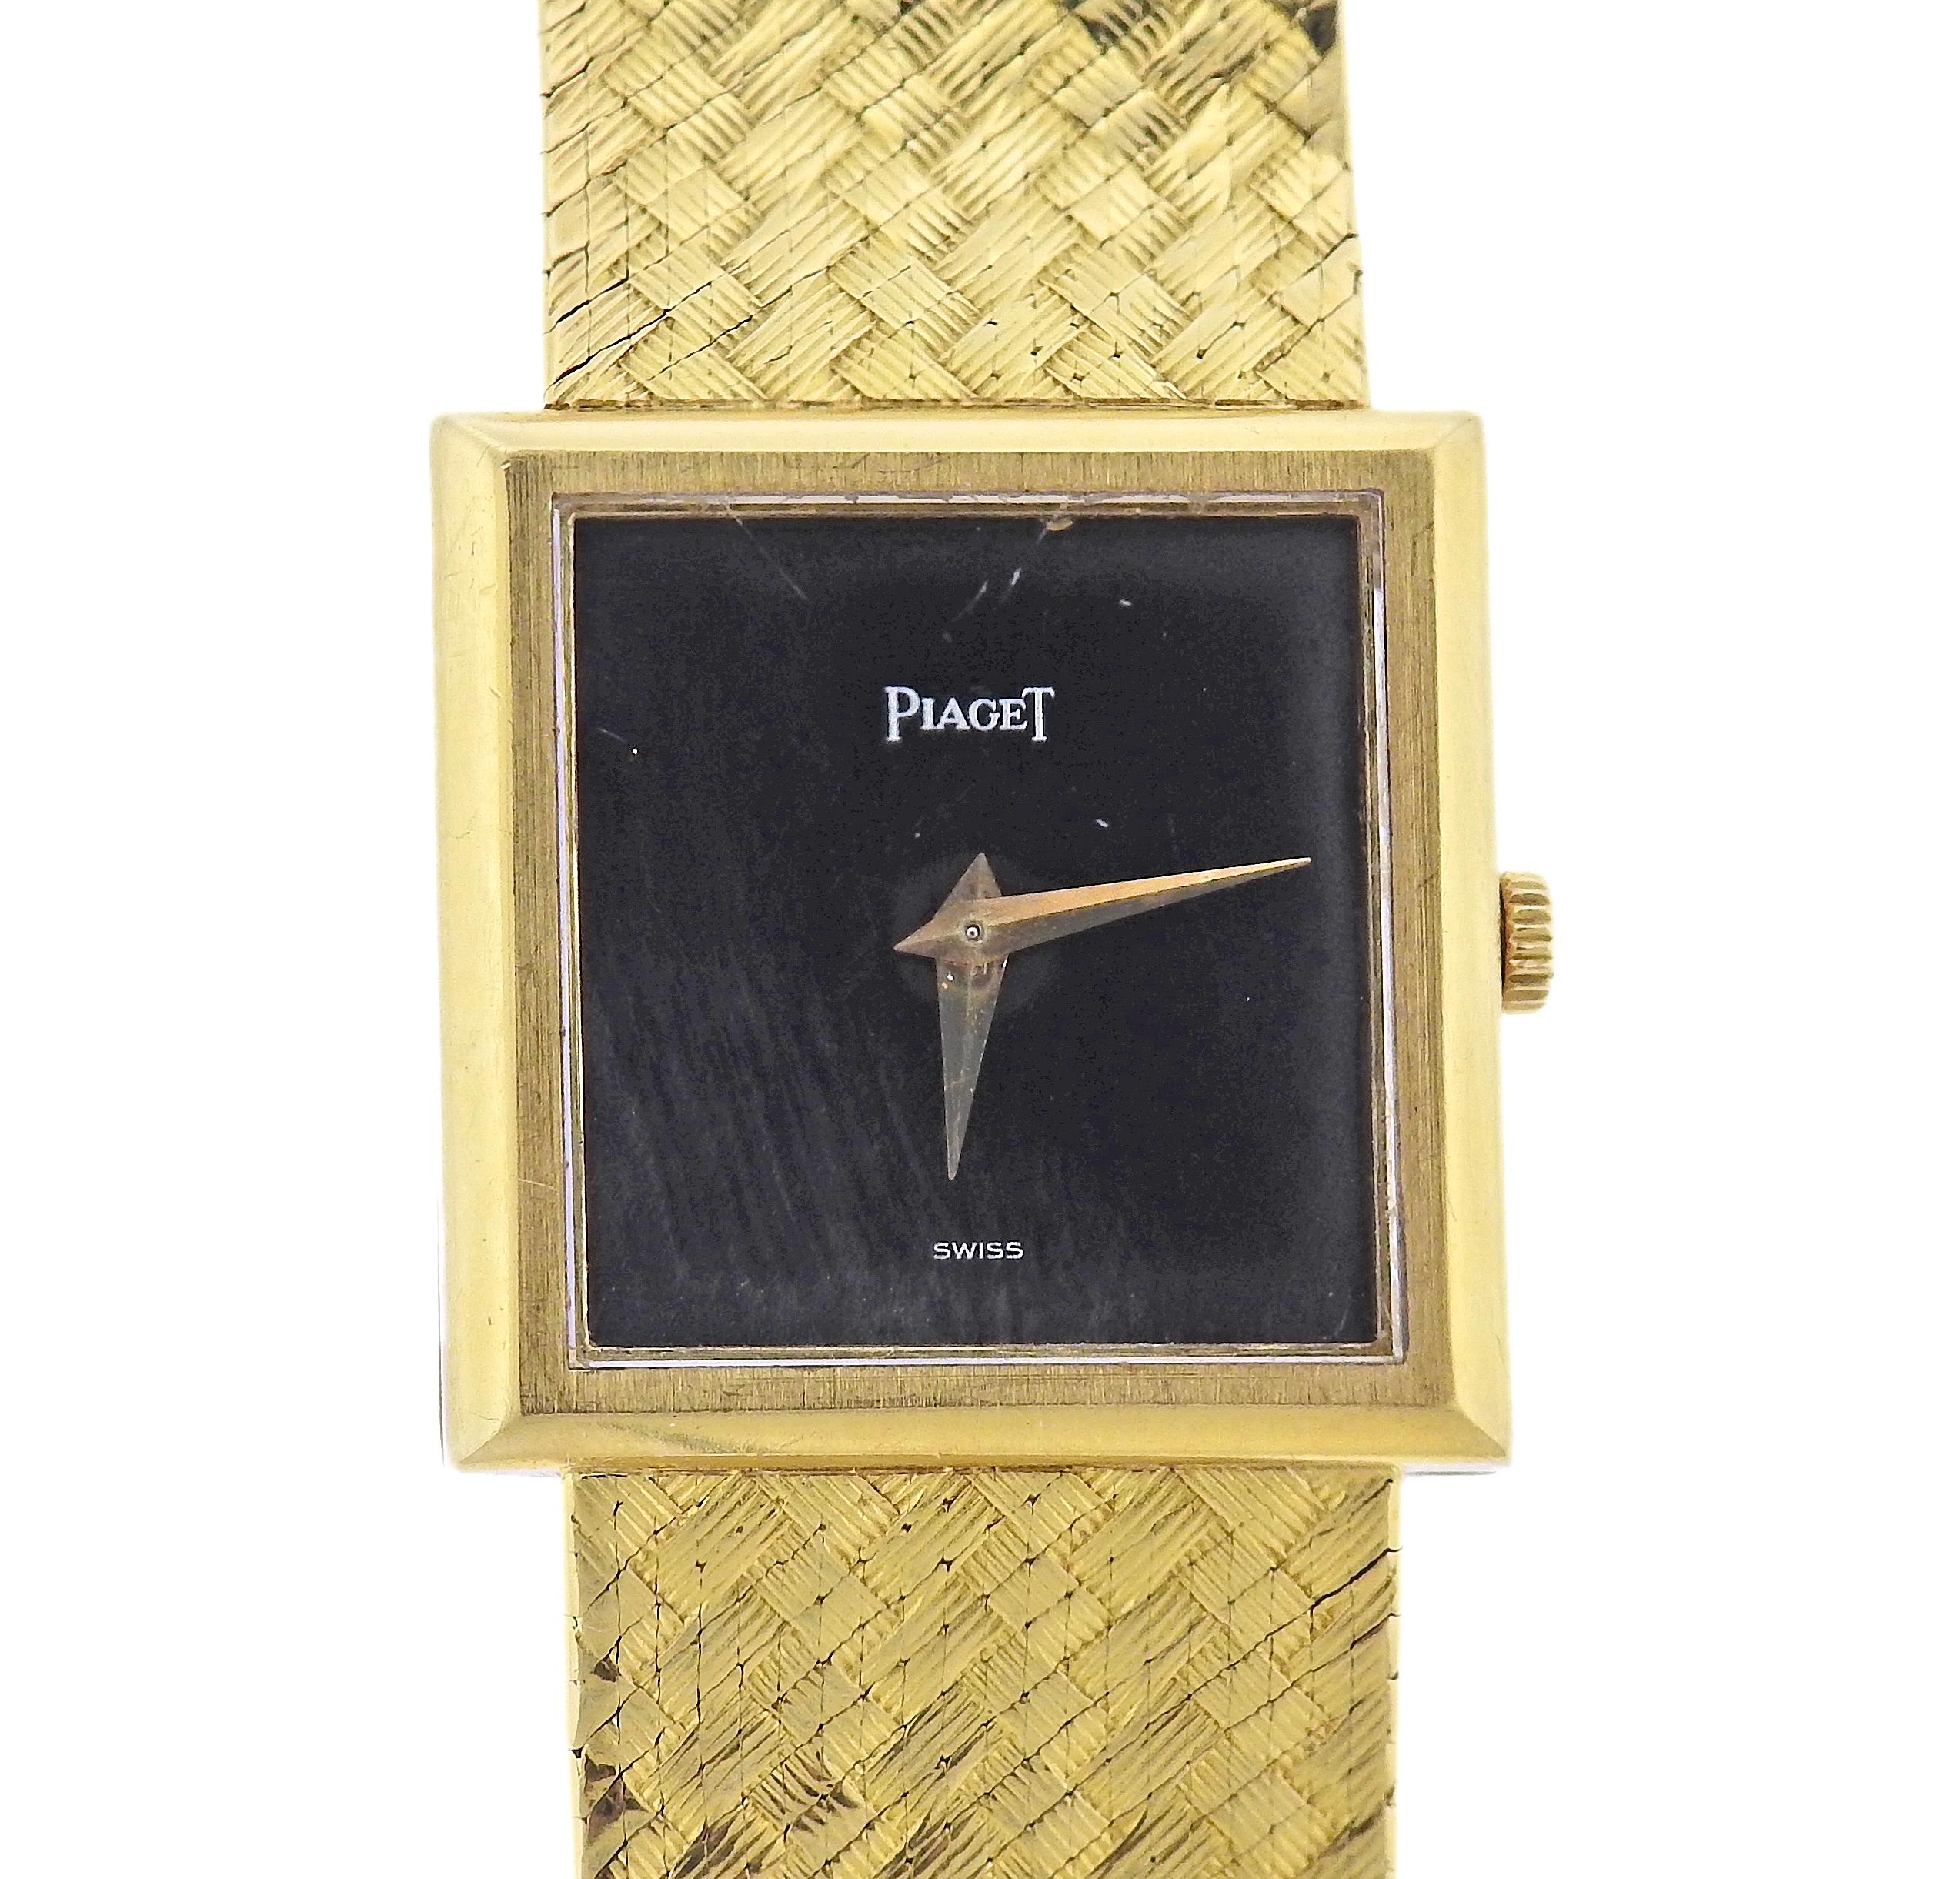 18k gold Piaget manual wind watch, with black diamond. Case is 22mm x 23mm. Bracelet is 6.5